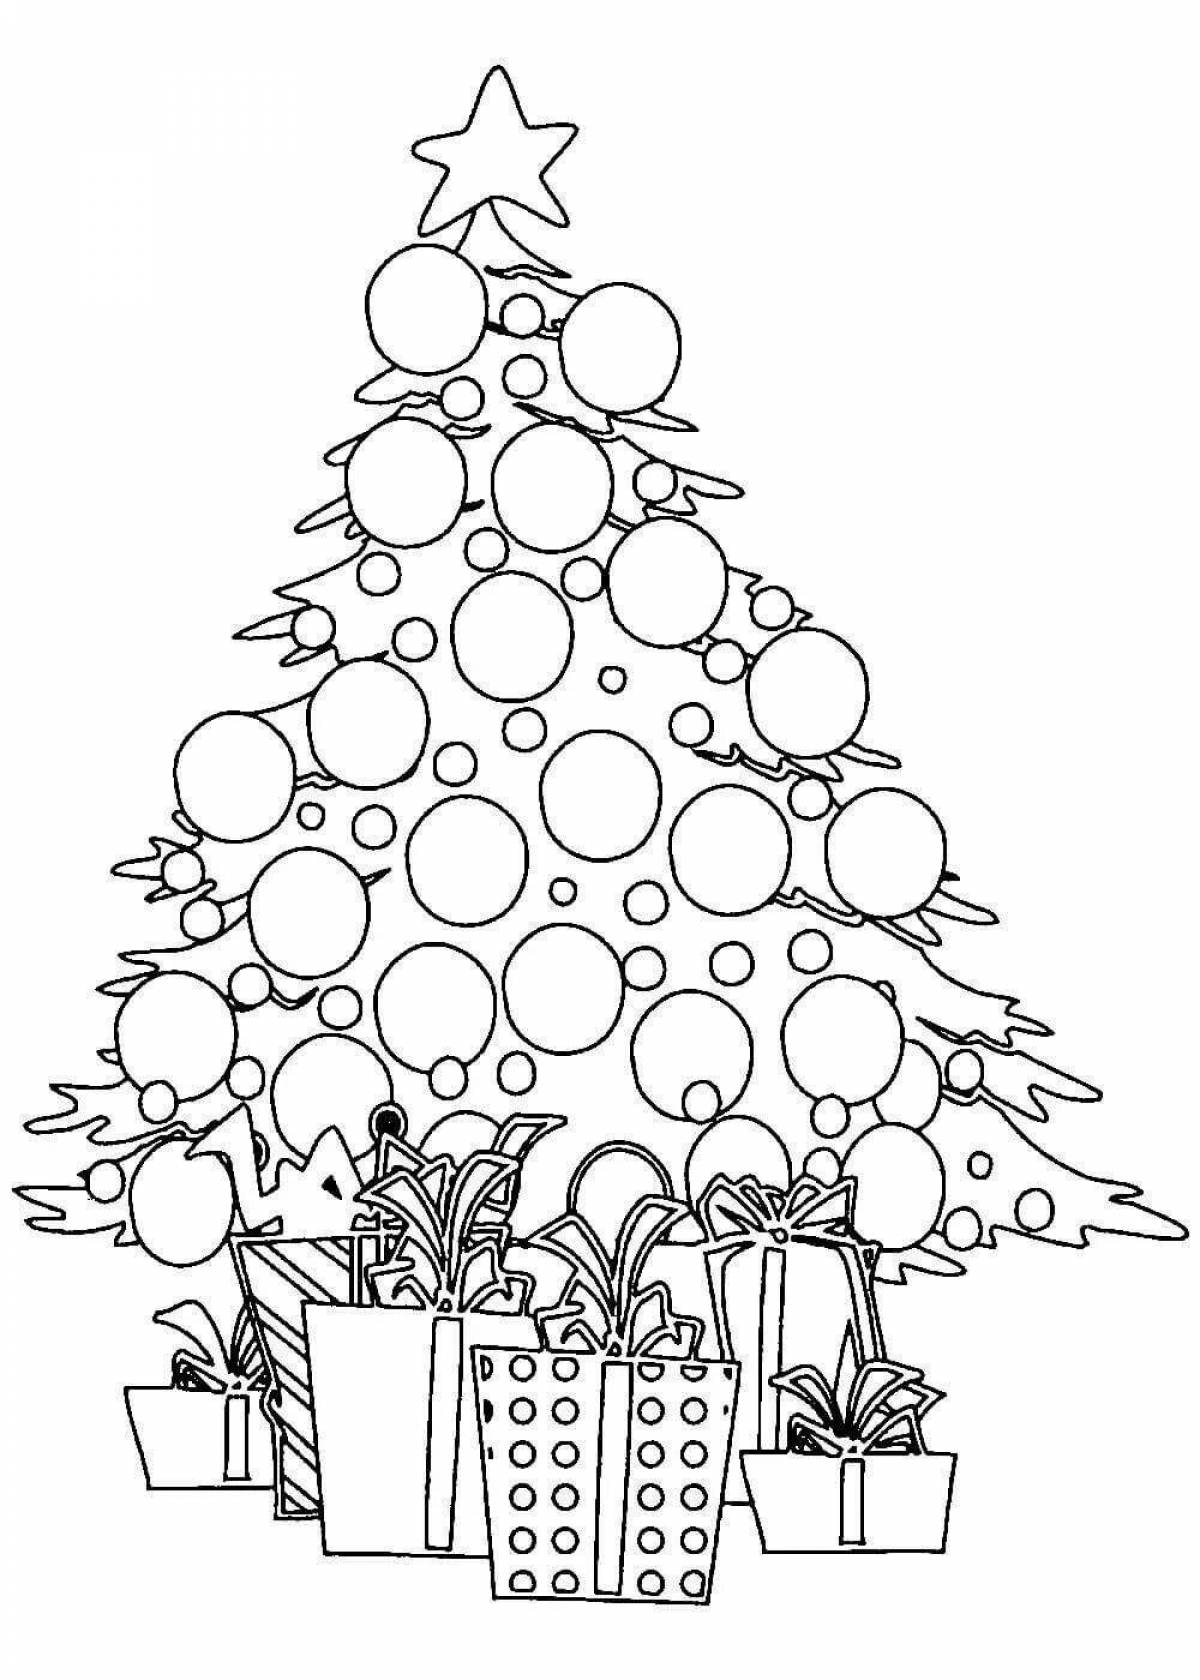 Merry Christmas tree drawing